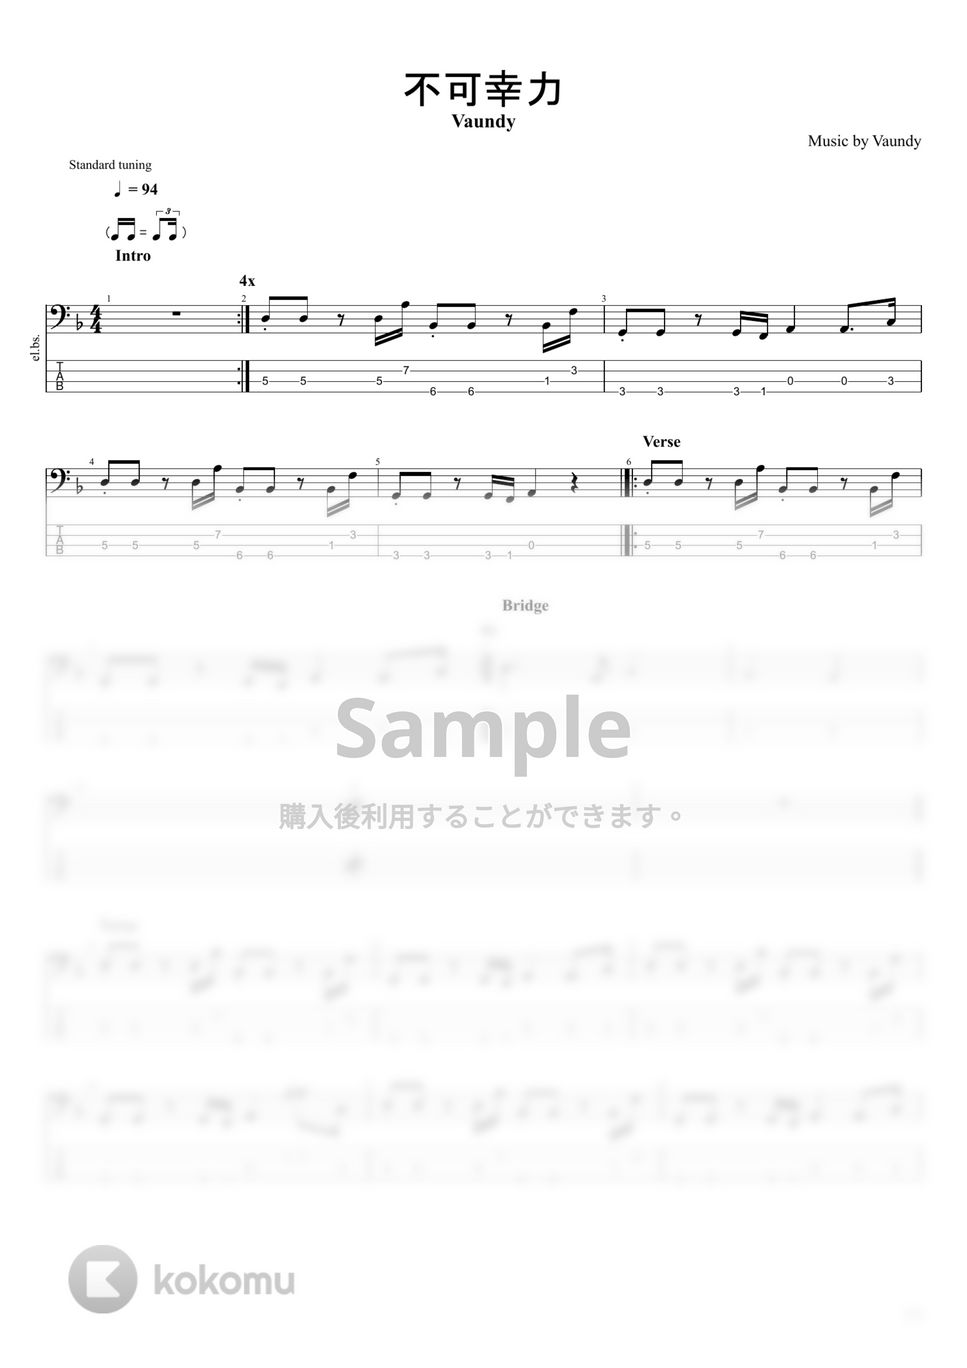 Vaundy - Vaundy楽譜集 (10曲) by まっきん